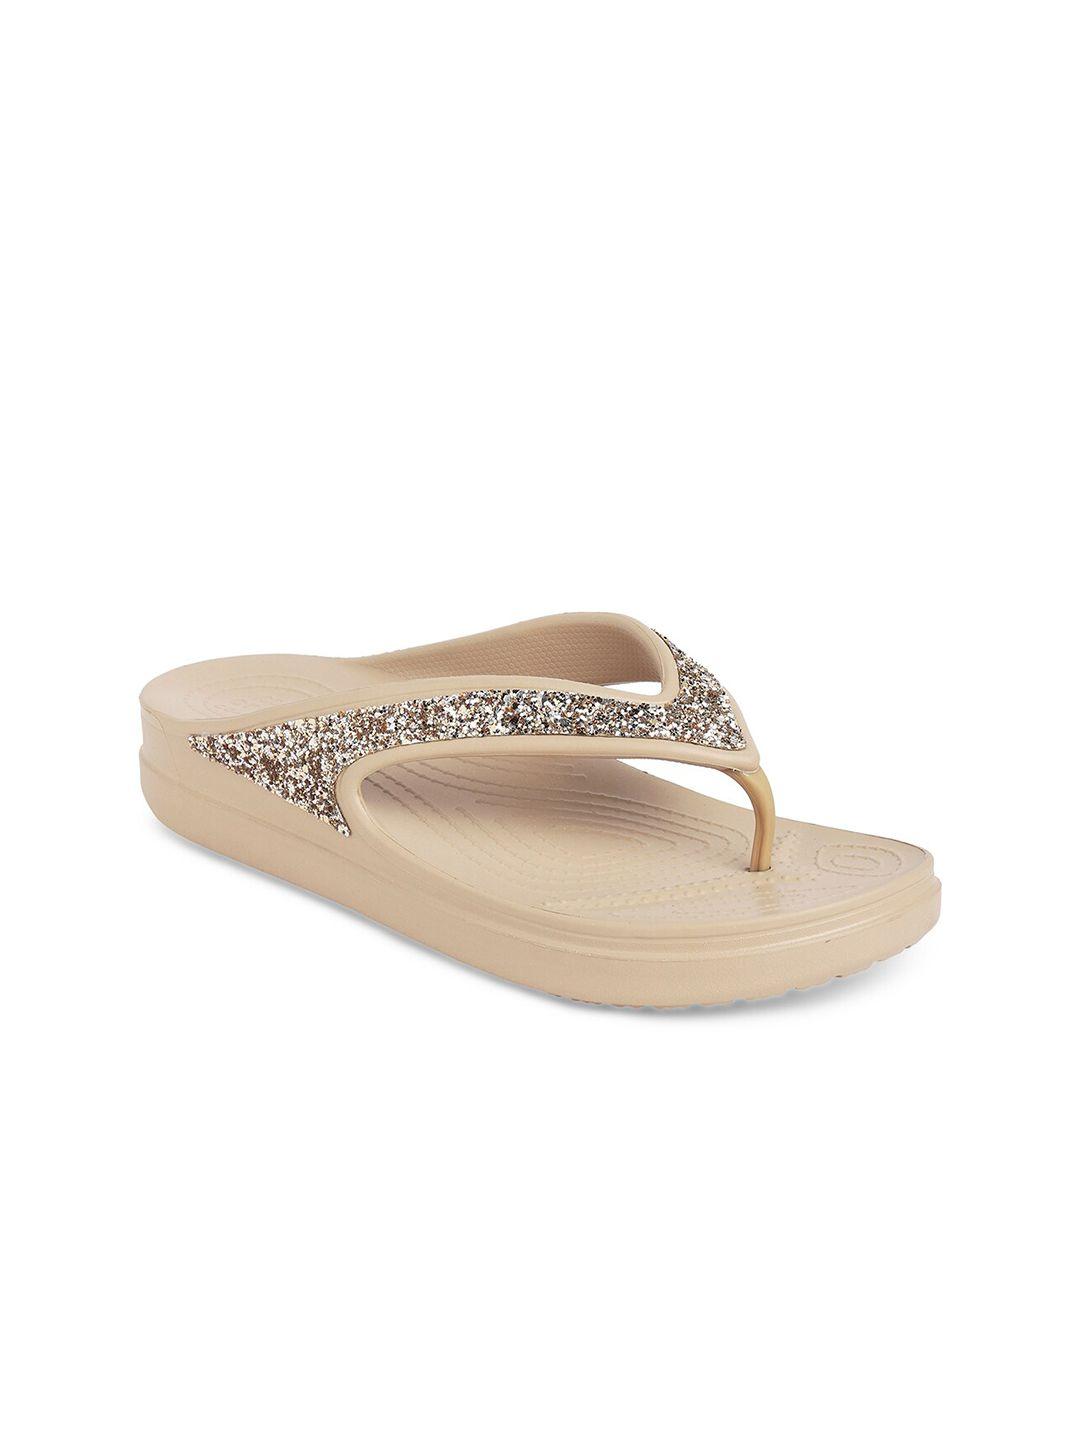 crocs-women-beige-embellished-croslite-thong-flip-flops